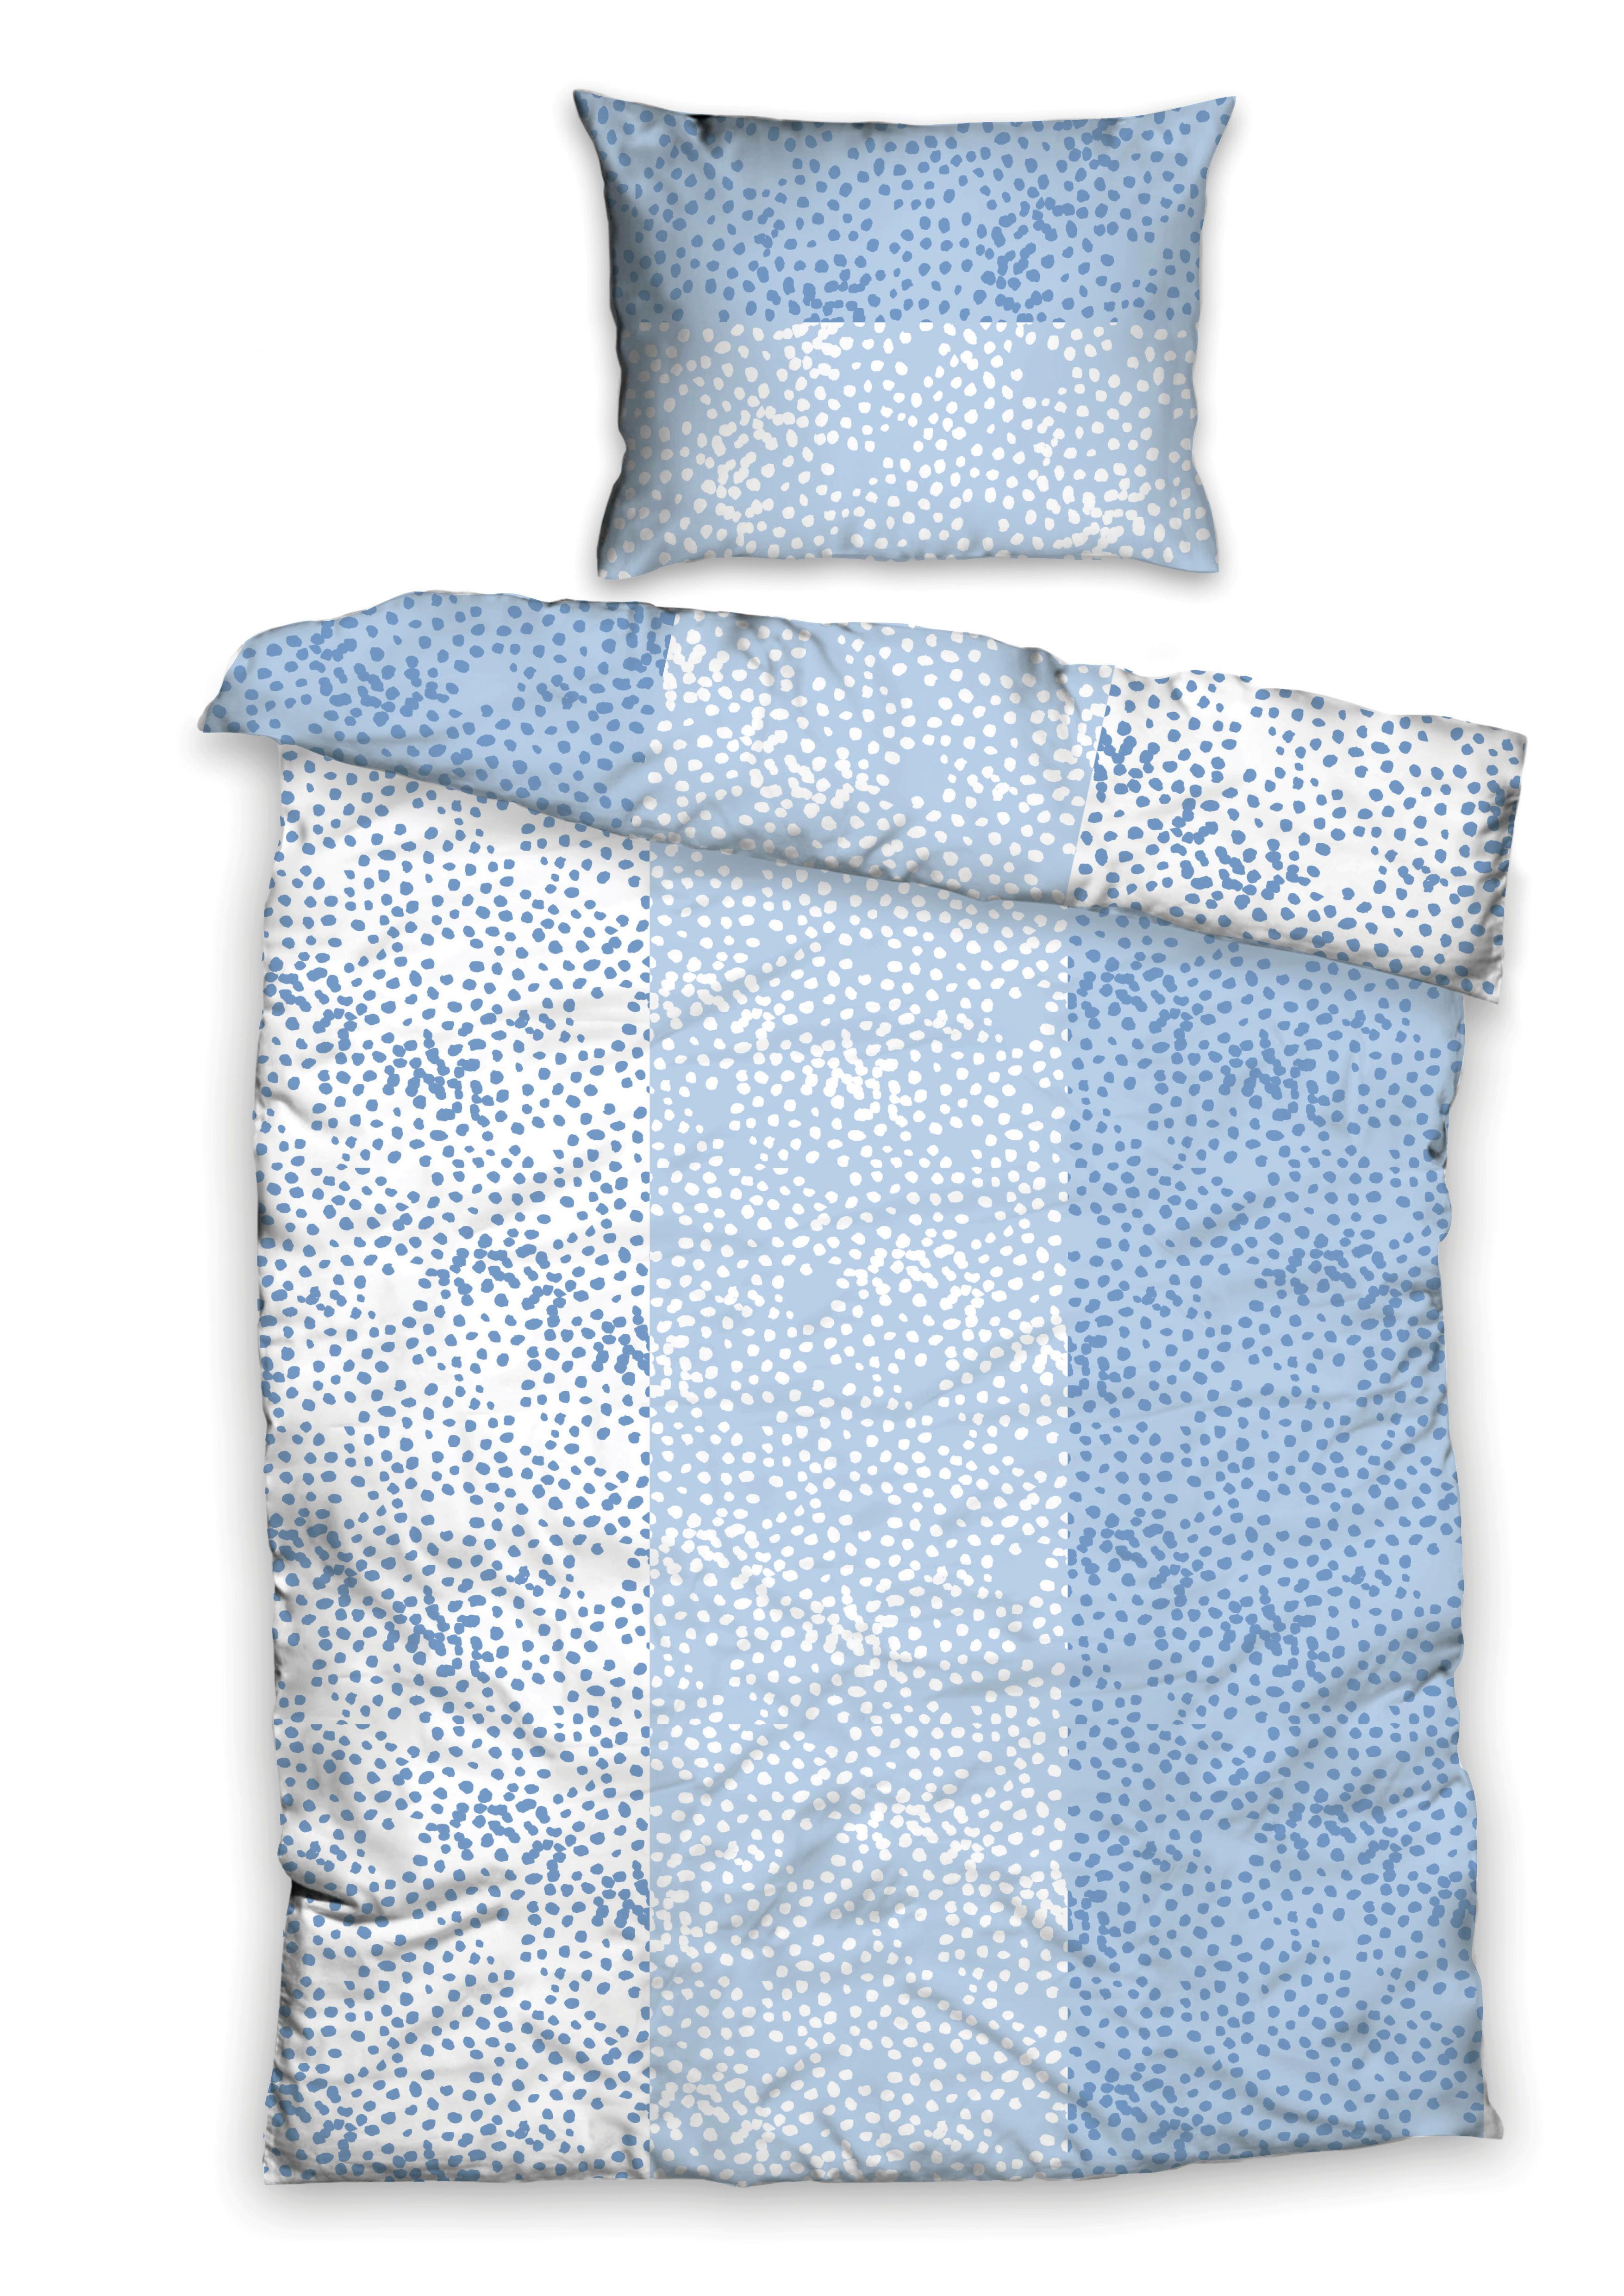 Posteľná Bielizeň Greta, 140/200cm, Modrá - modrá/biela, Basics, textil (140/200cm)